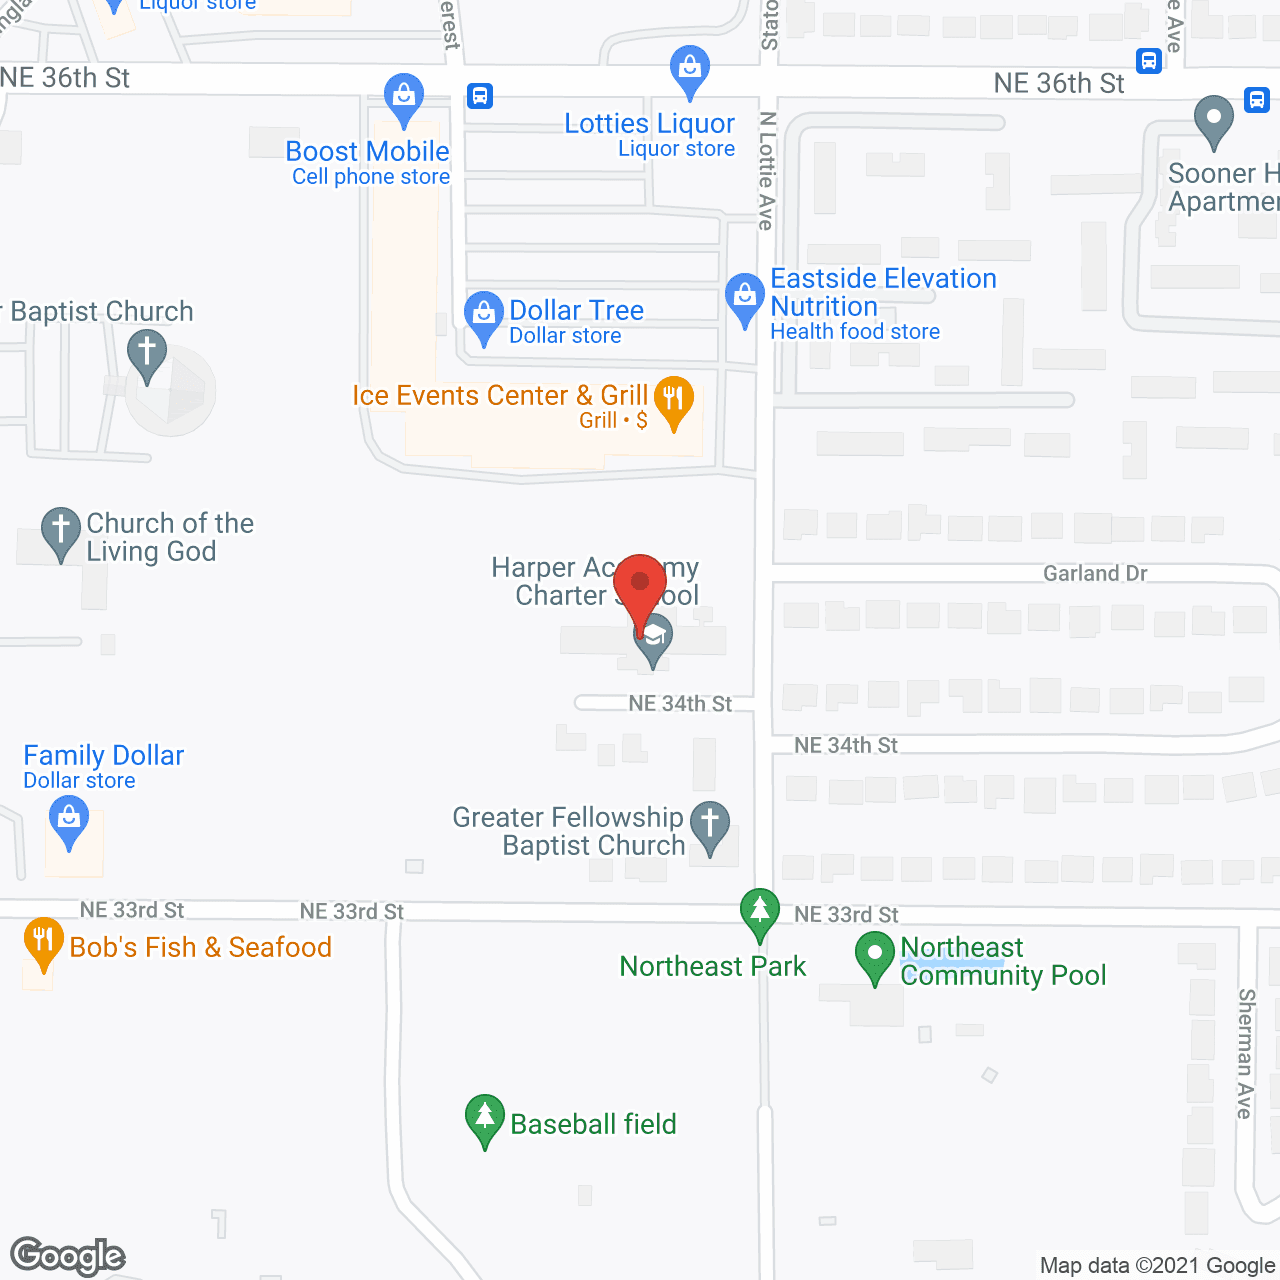 Alvira Heights Manor in google map